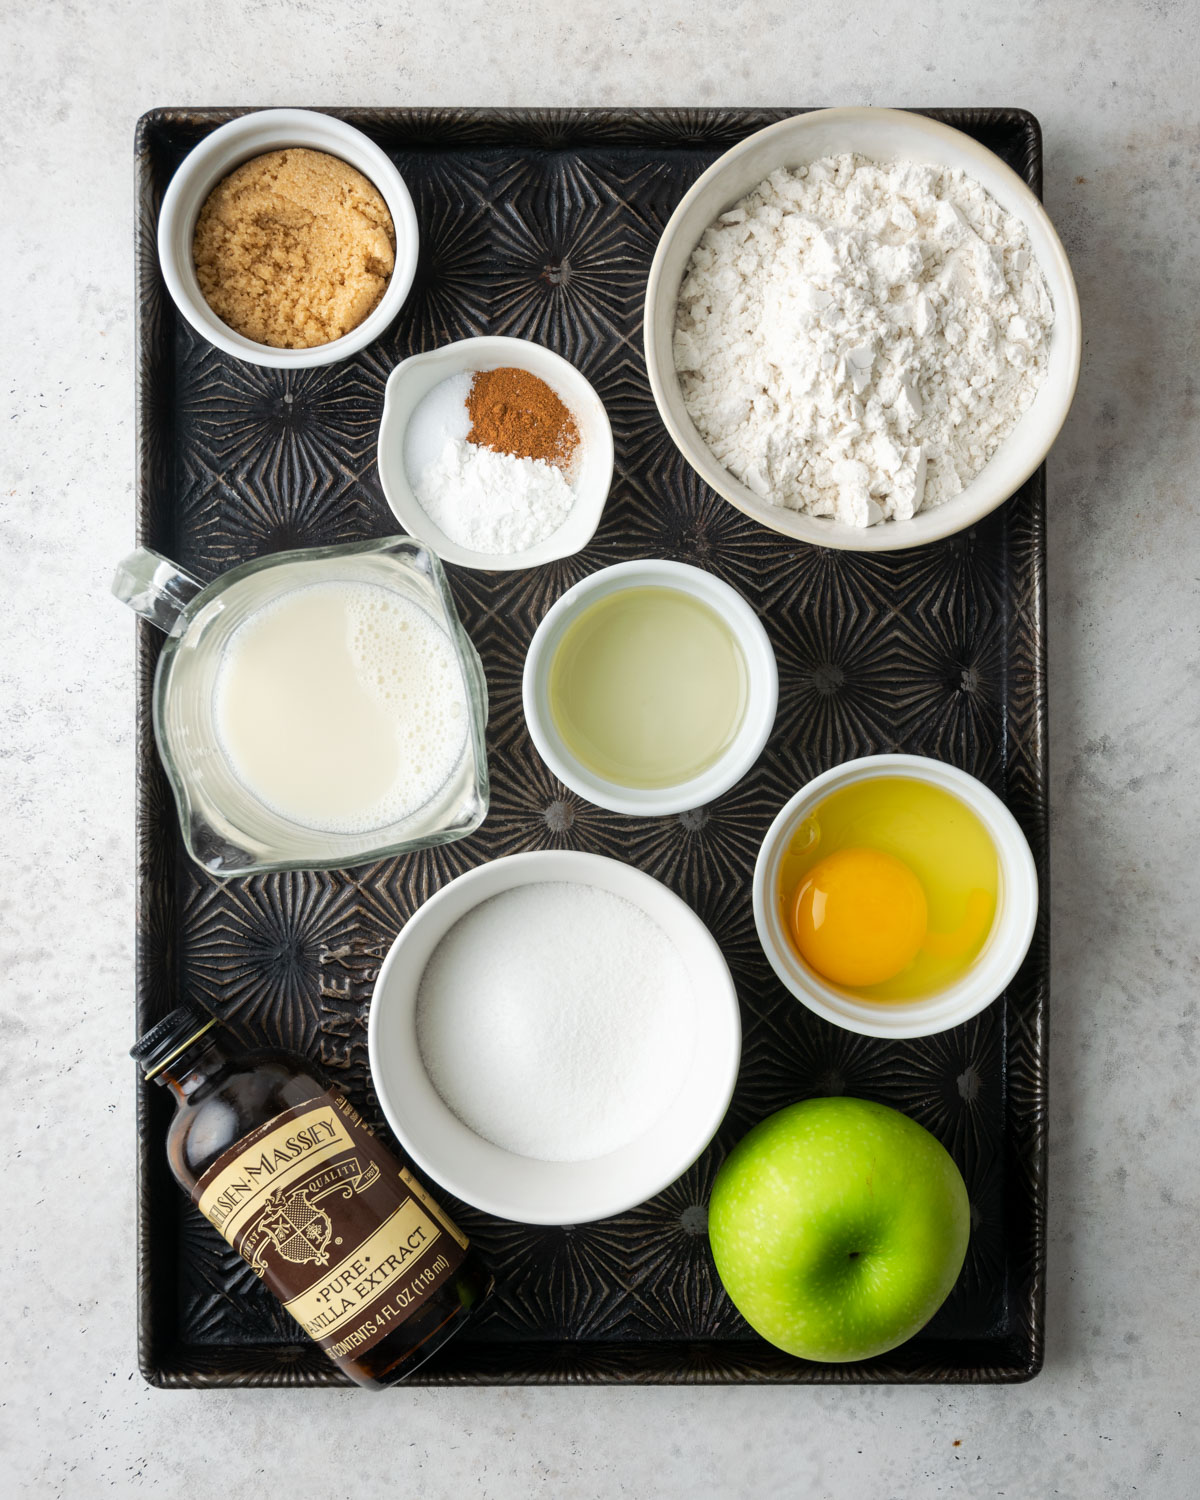 Ingredients for gluten free apple muffins.